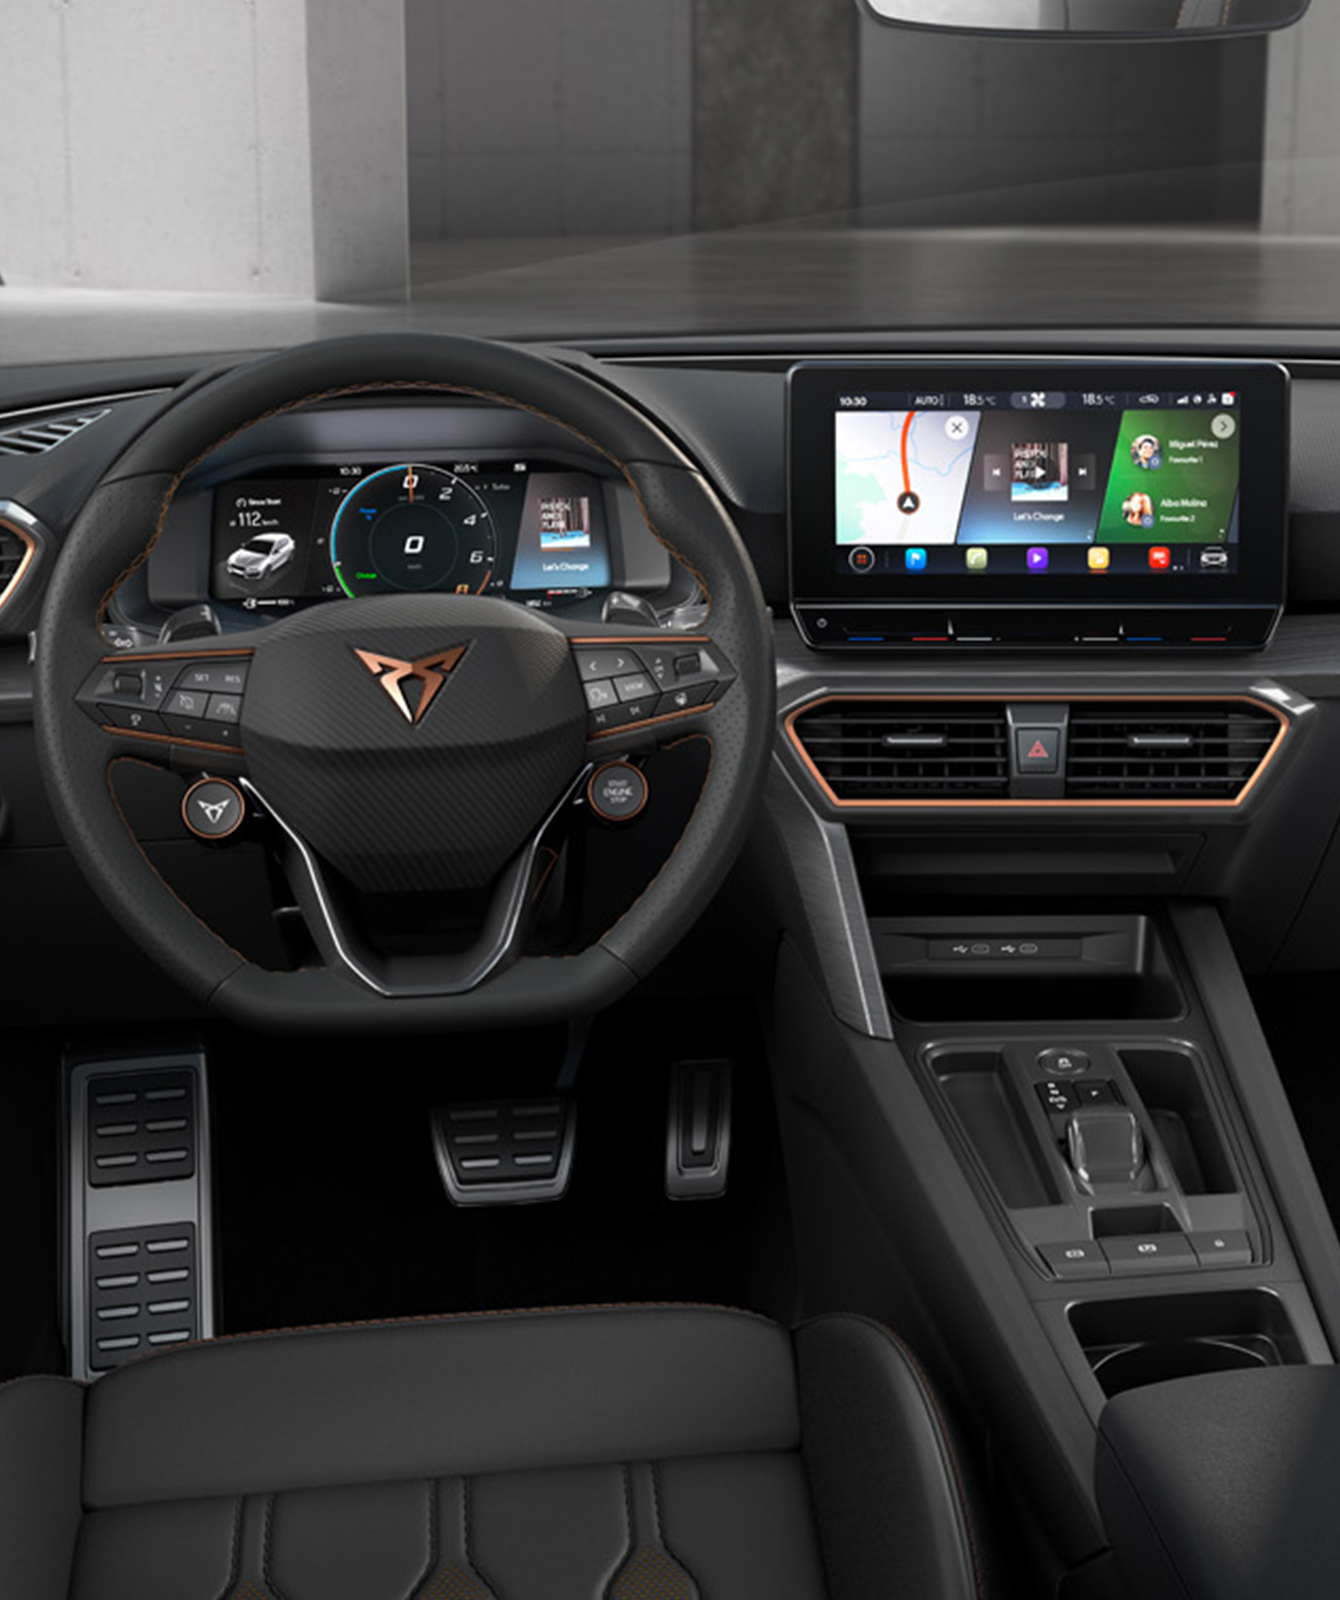 CUPRA interior and steering wheel